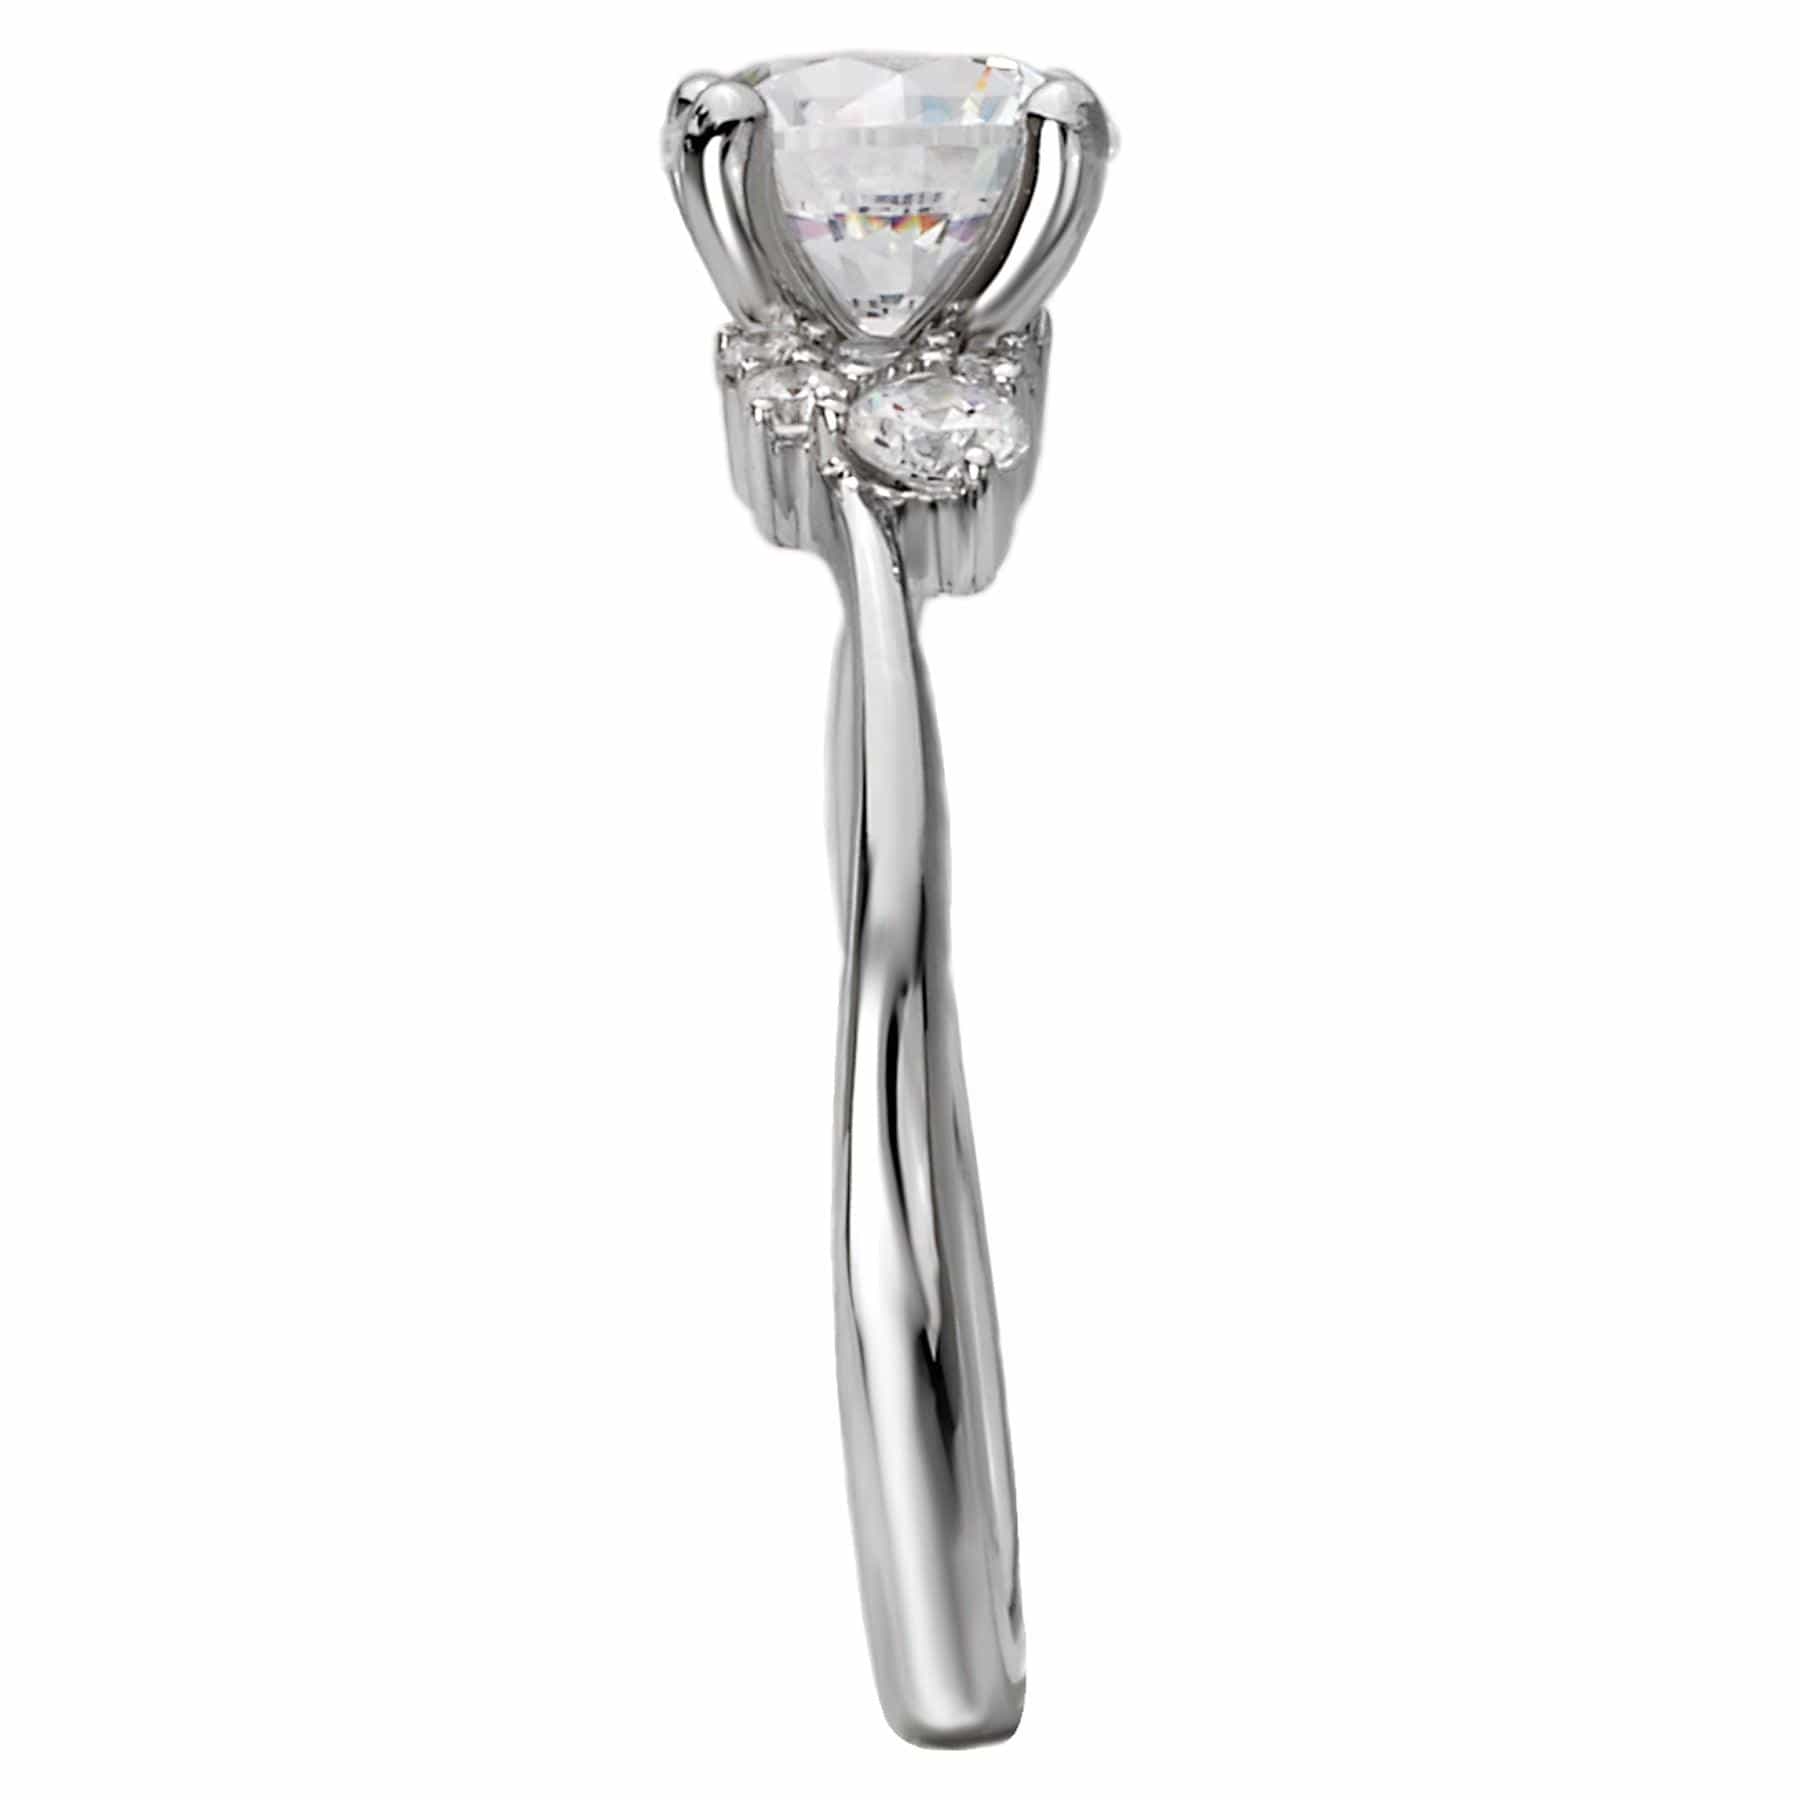 BW JAMES Engagement Rings "The Neenah" Round Free Form Semi-Mount Diamond Ring